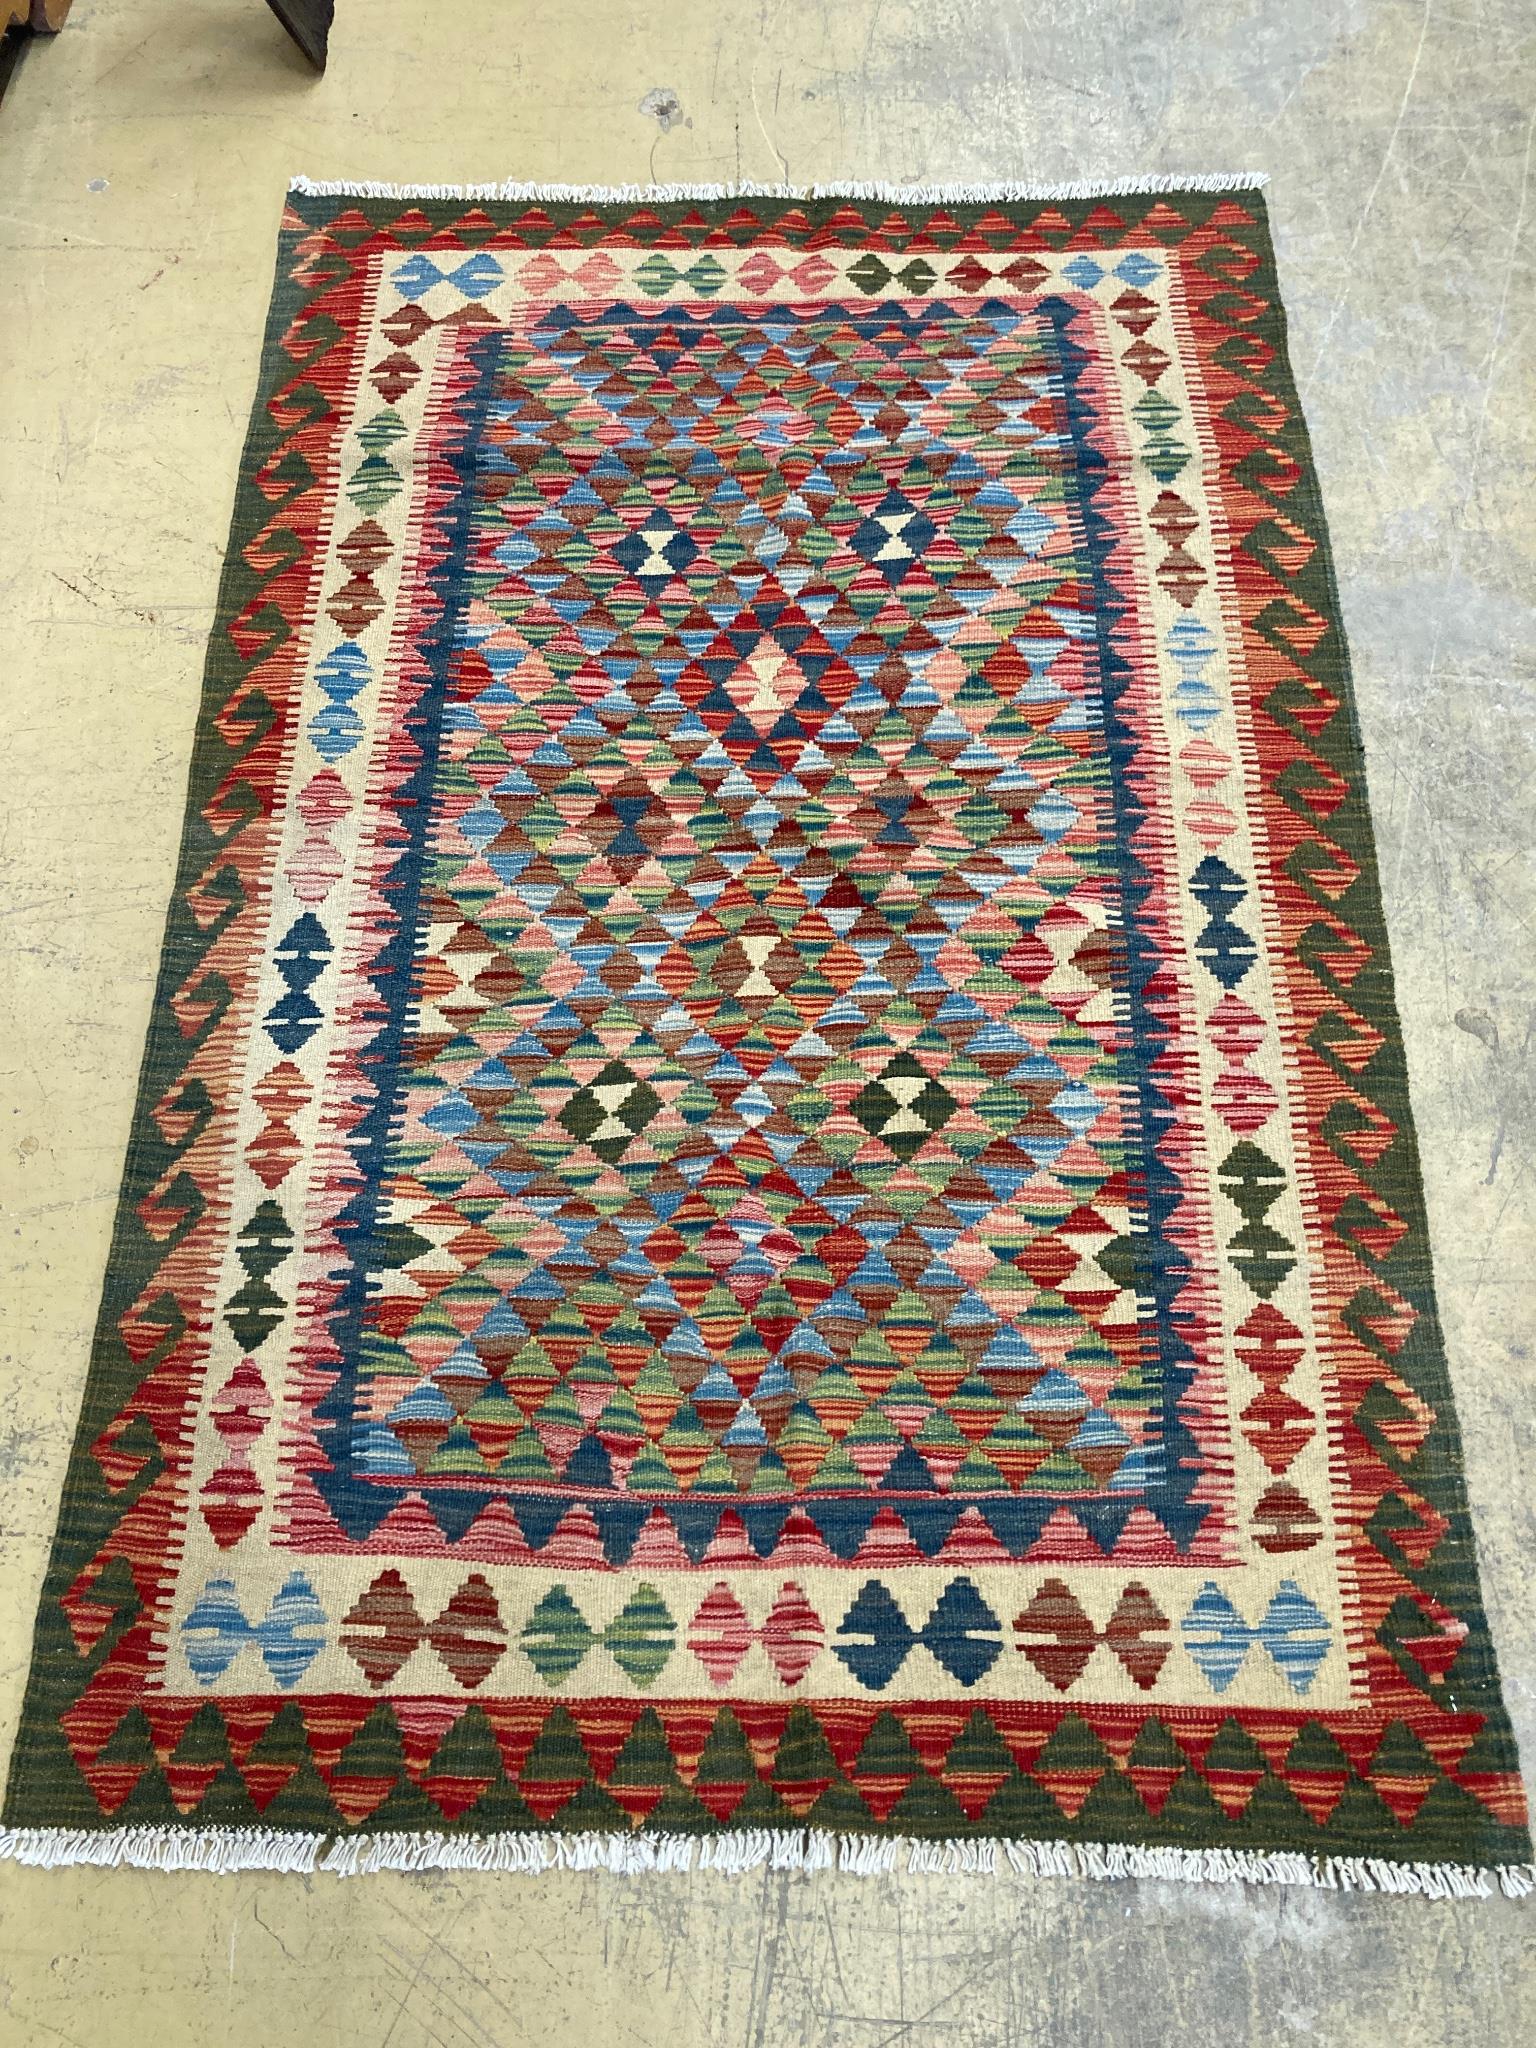 An Afghan multi-coloured geometric patterned kilim rug, 182 x 119cm